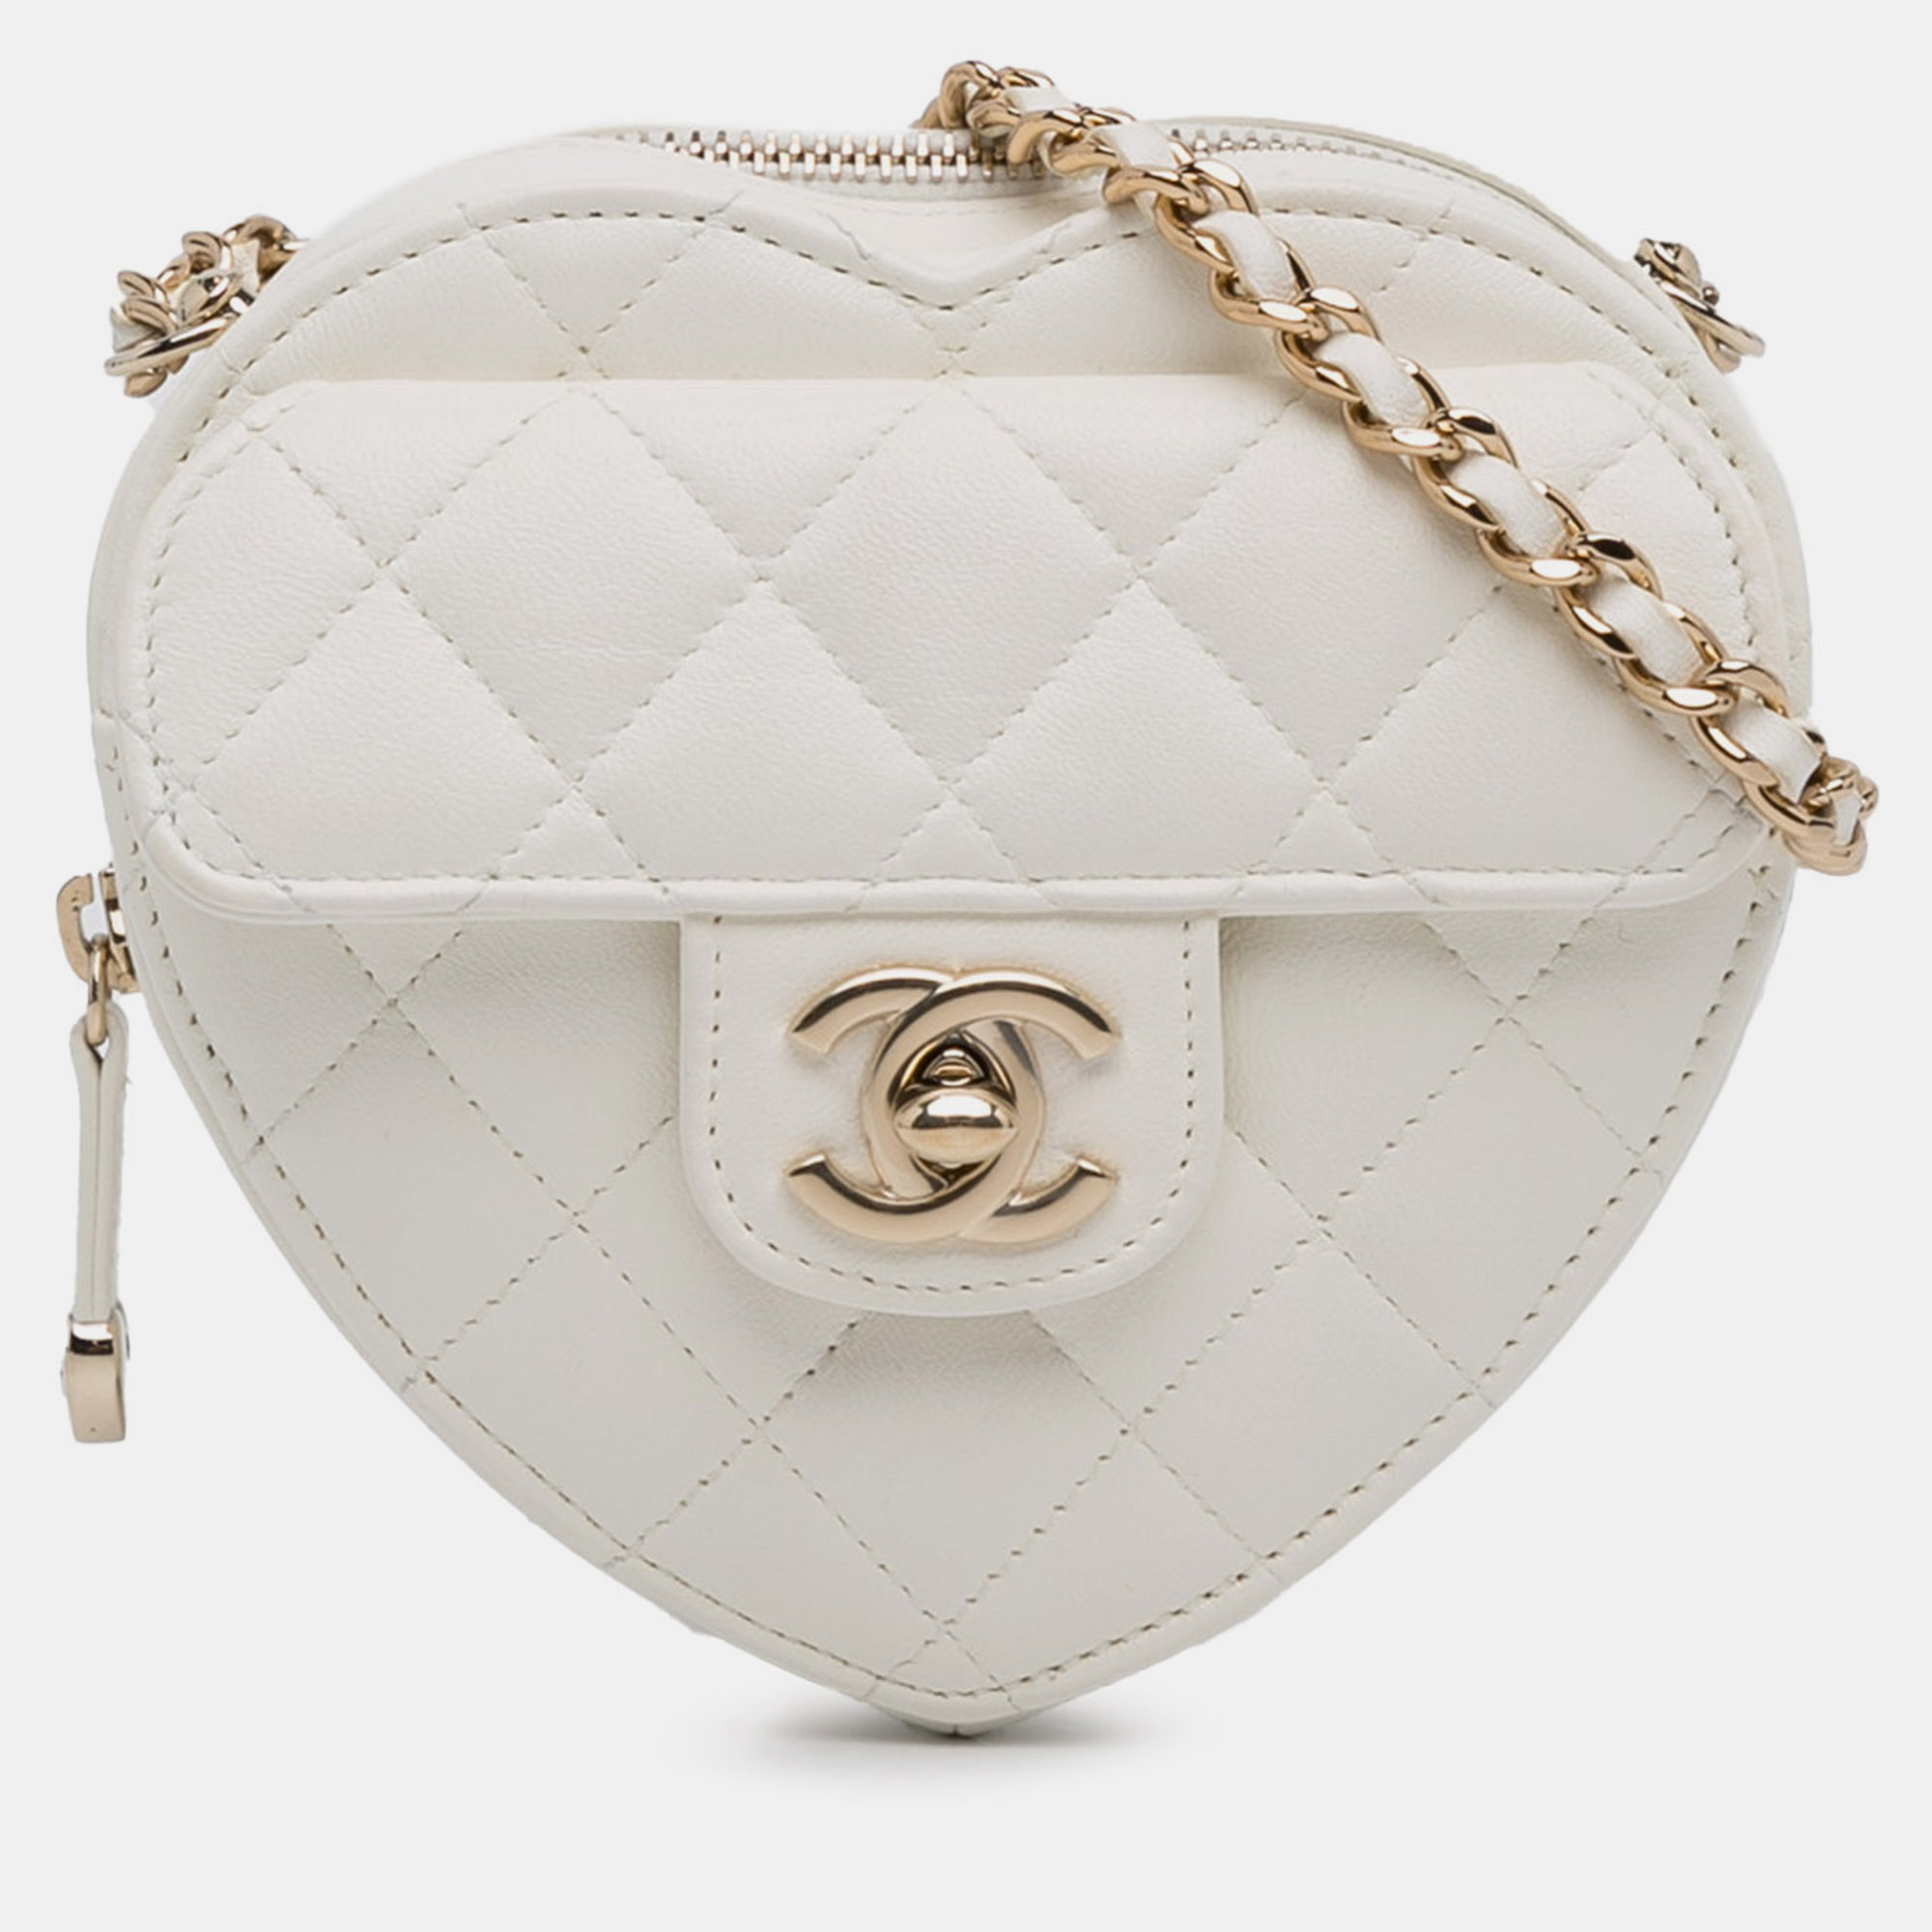 Chanel mini cc in love heart crossbody bag